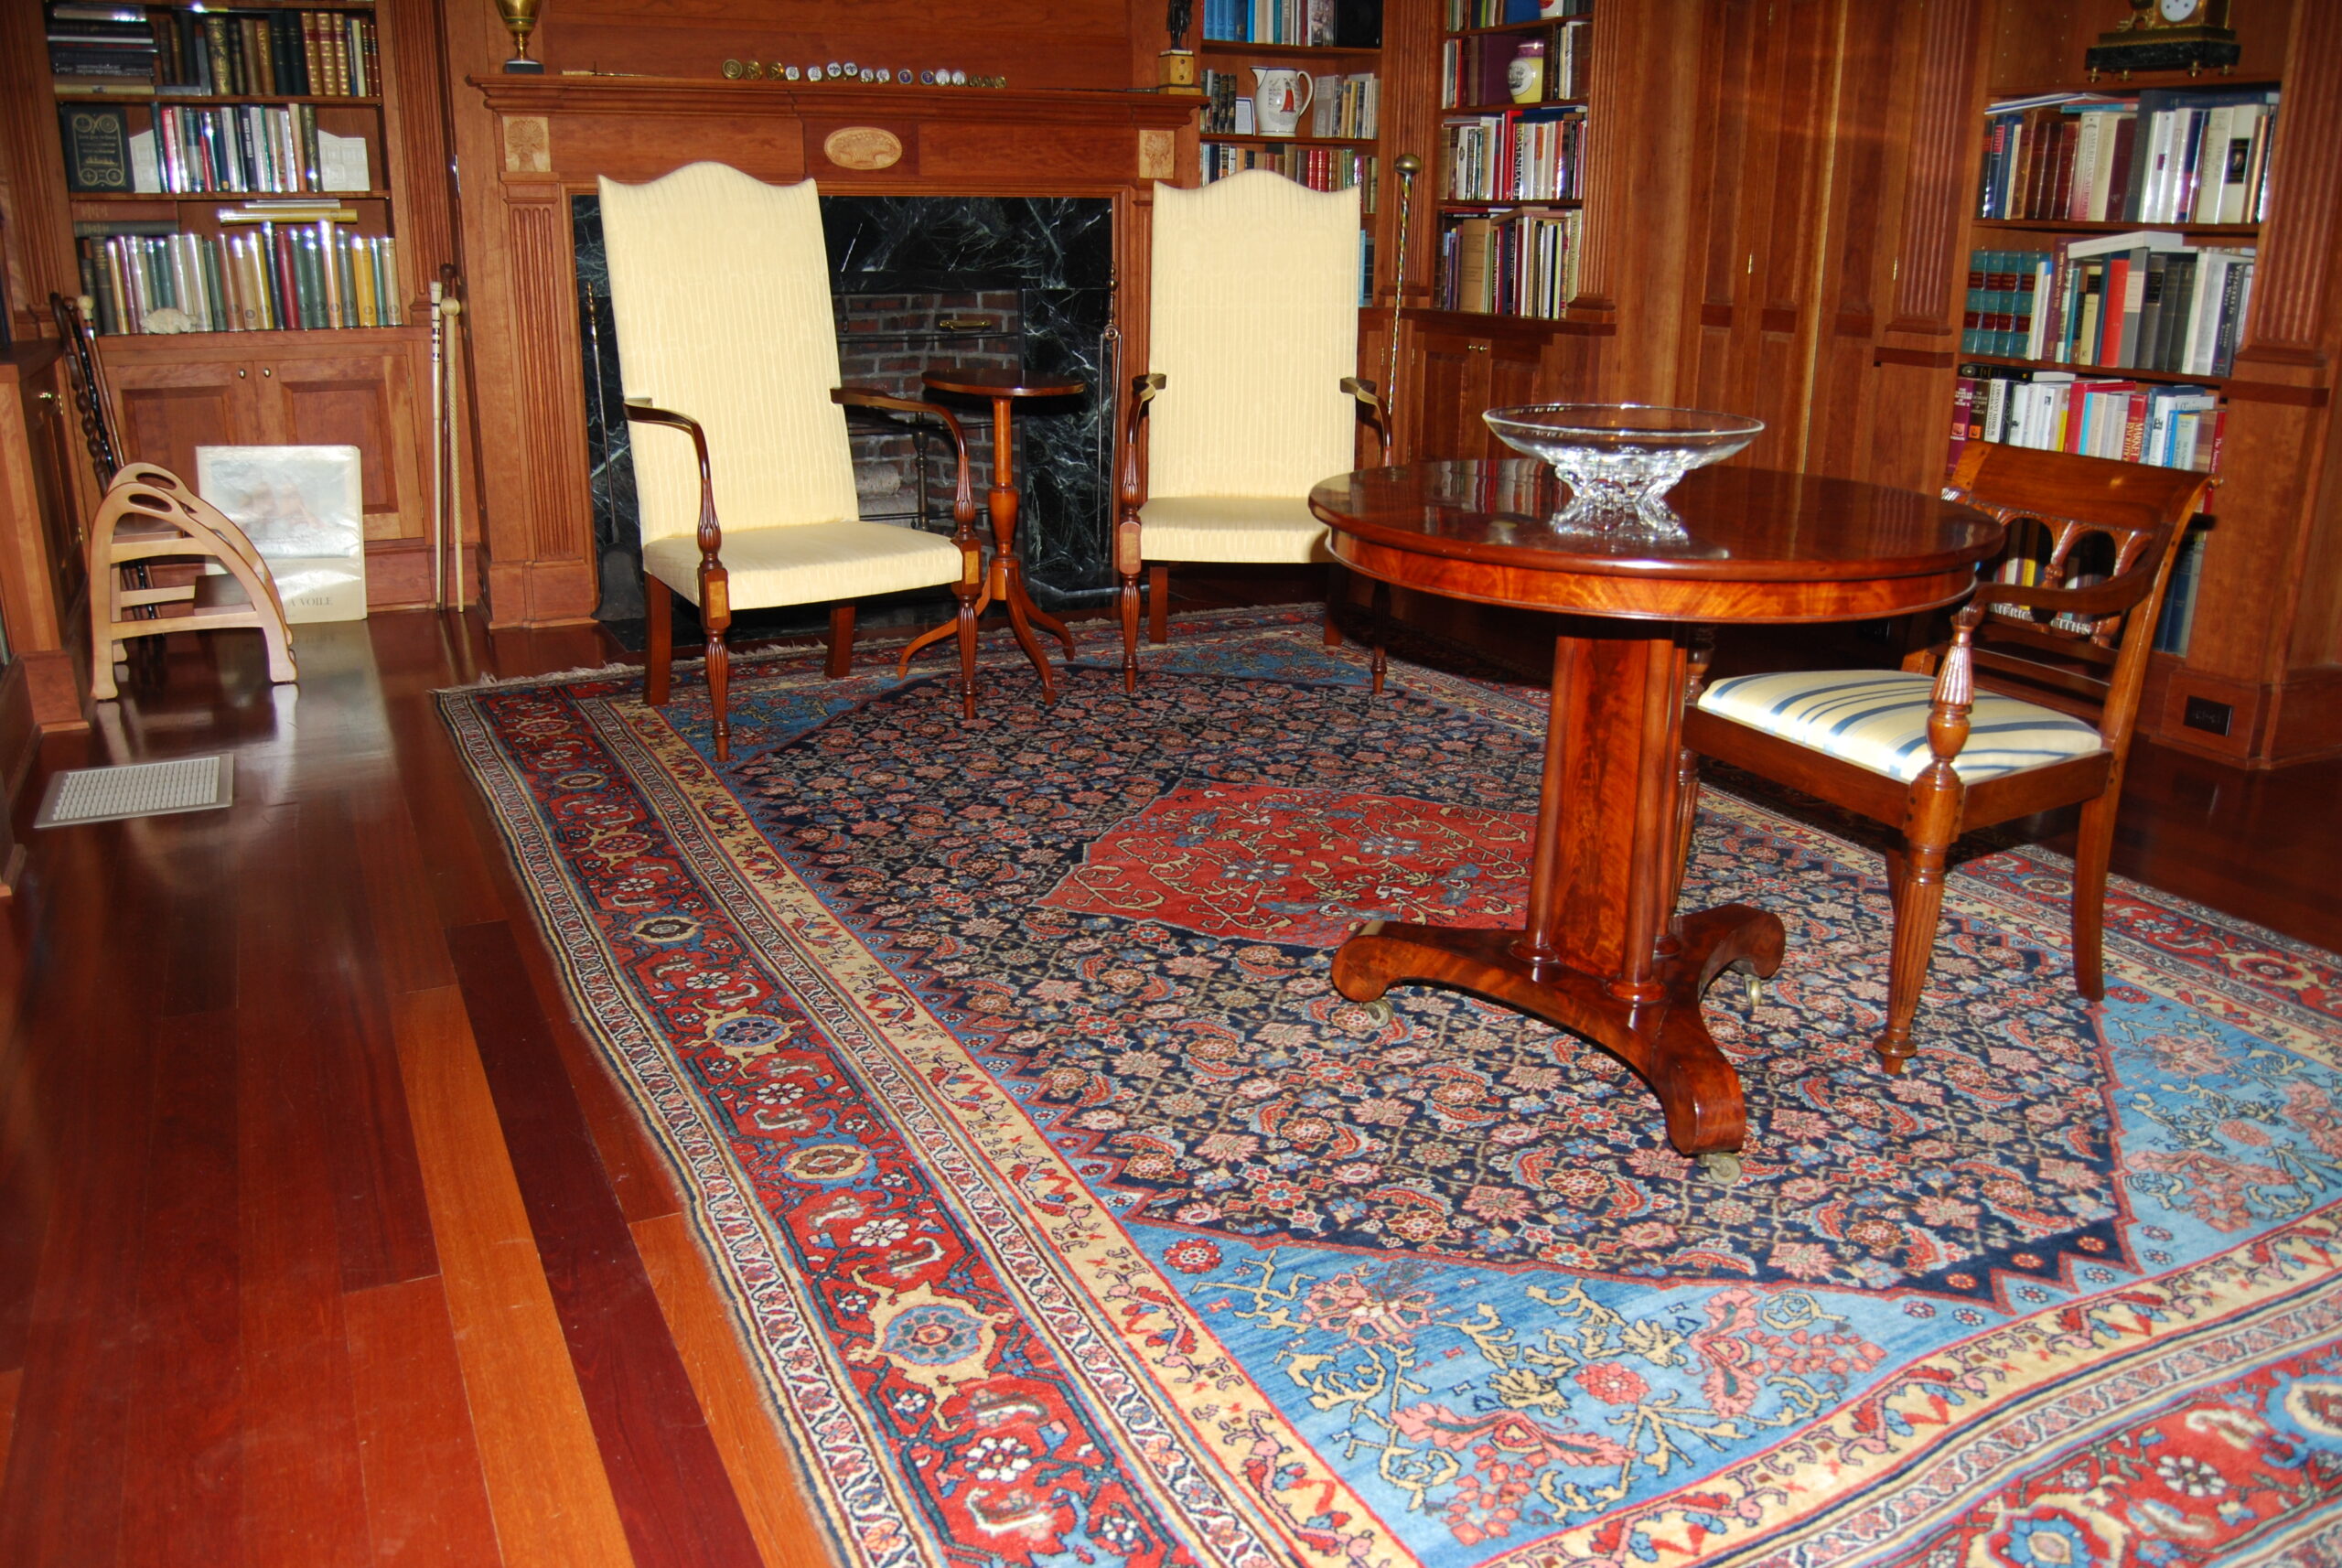 New England family library with antique Persian Bidjar carpet.